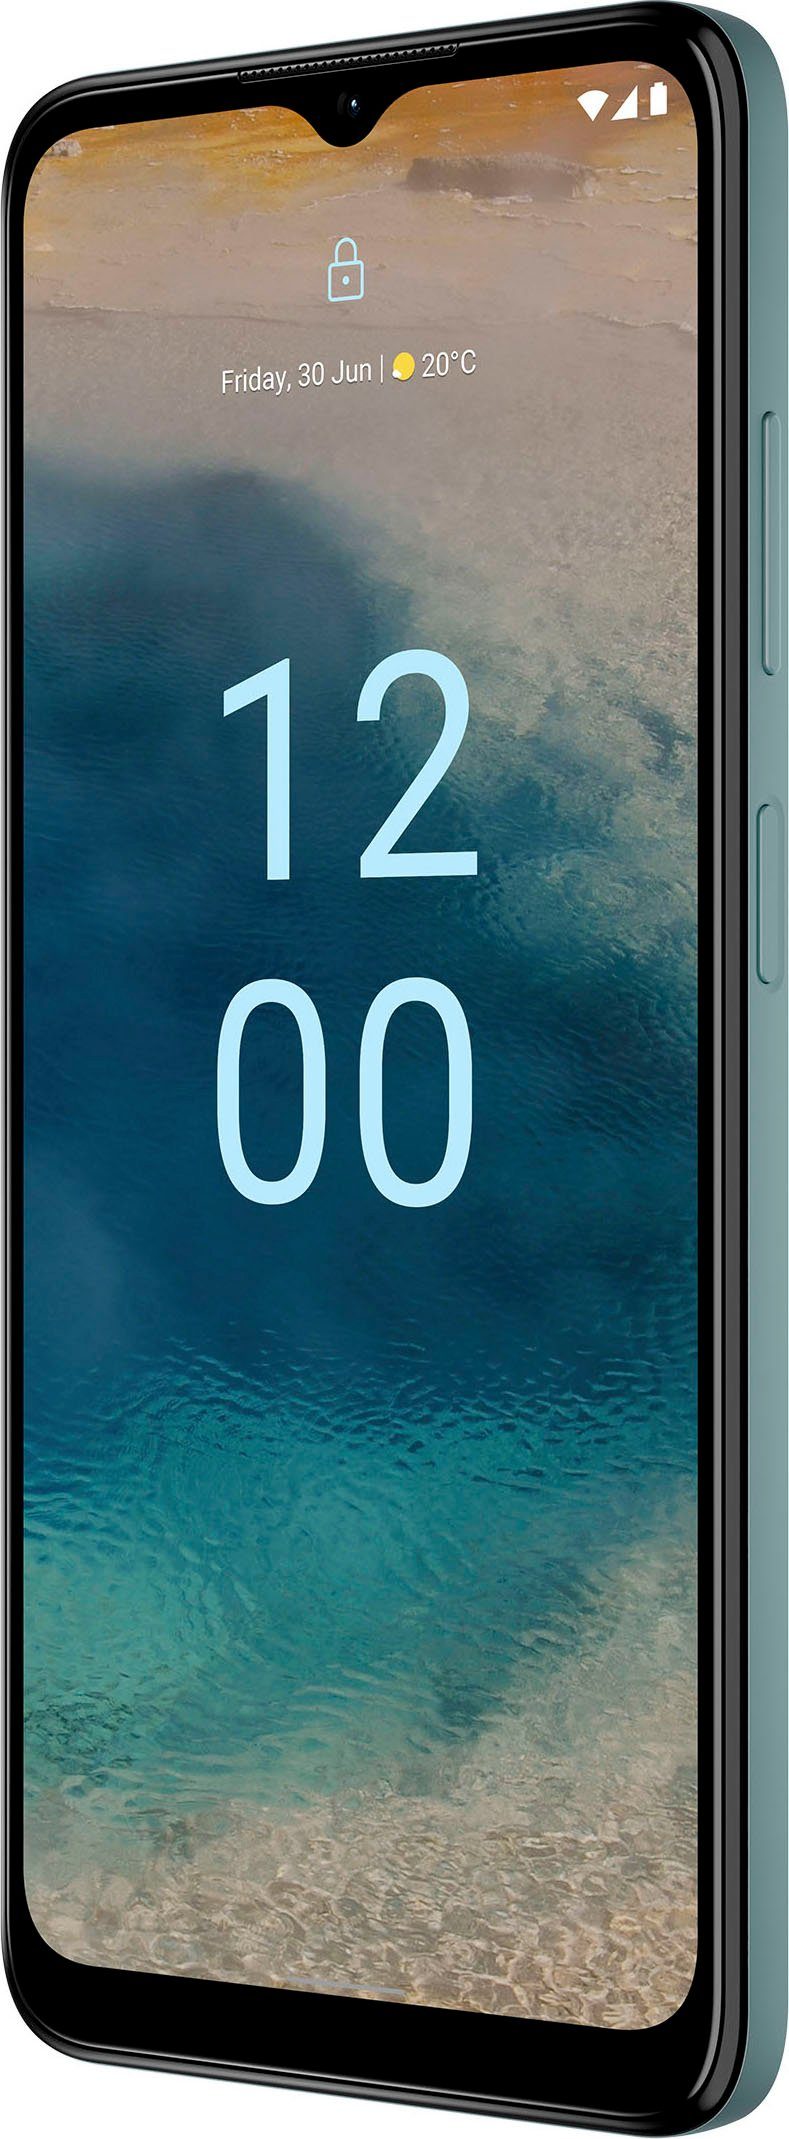 Zoll, 50 Nokia Smartphone MP cm/6,52 Blue GB Lagoon 64 Speicherplatz, (16,56 Kamera) G22